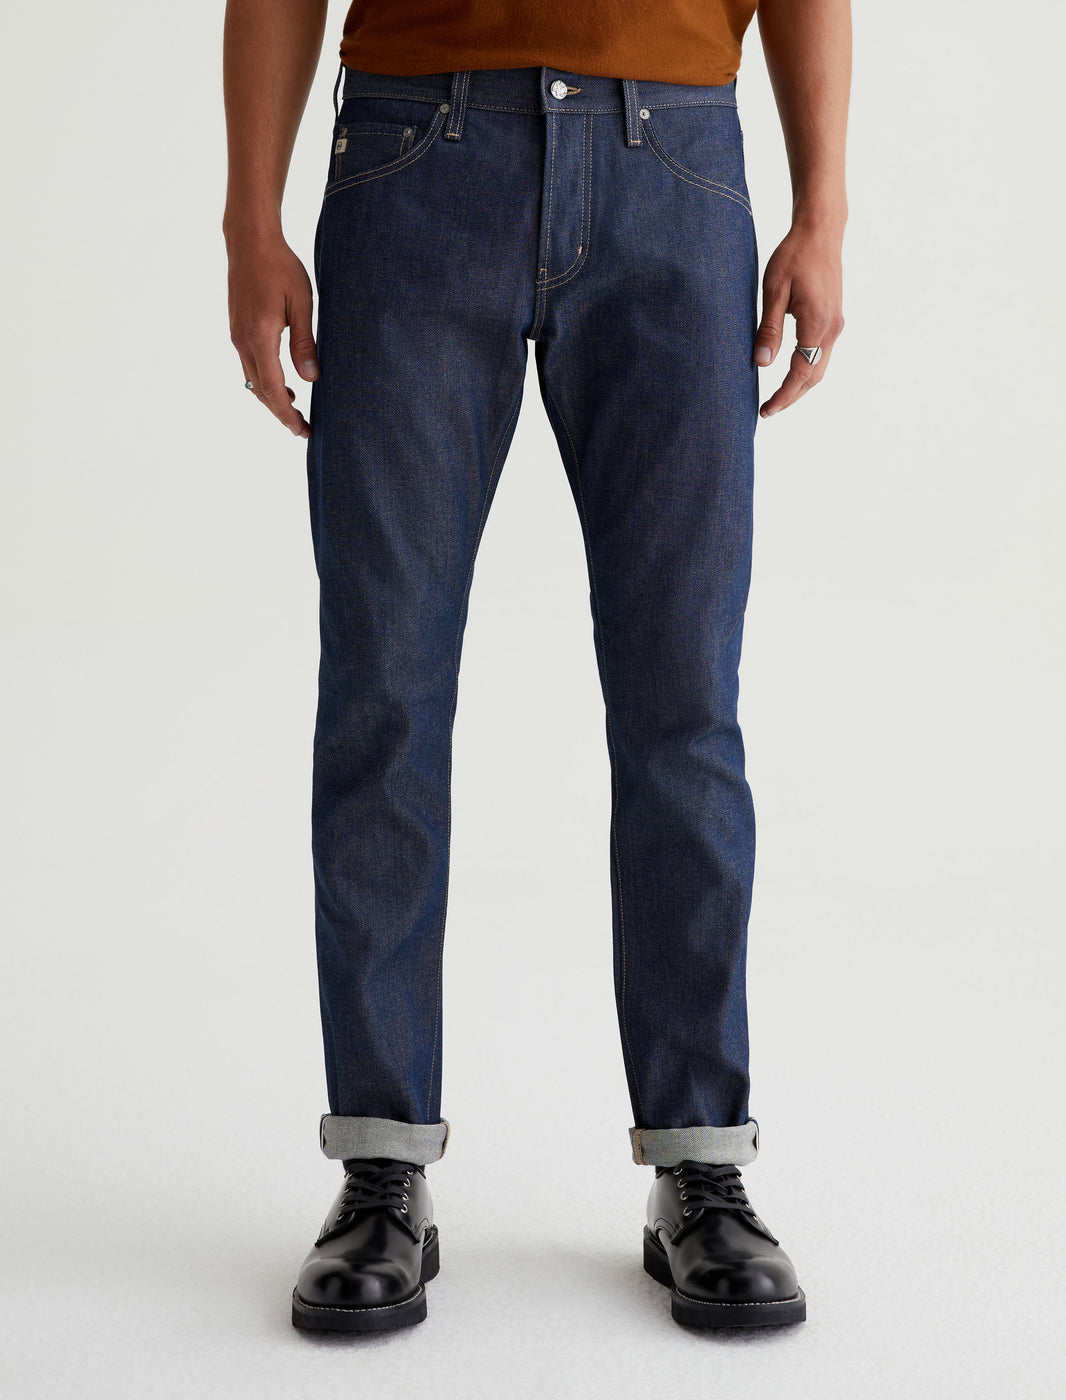 GAP Men's Soft Wear Stretch Skinny Fit Denim Jeans, Resin Rinse